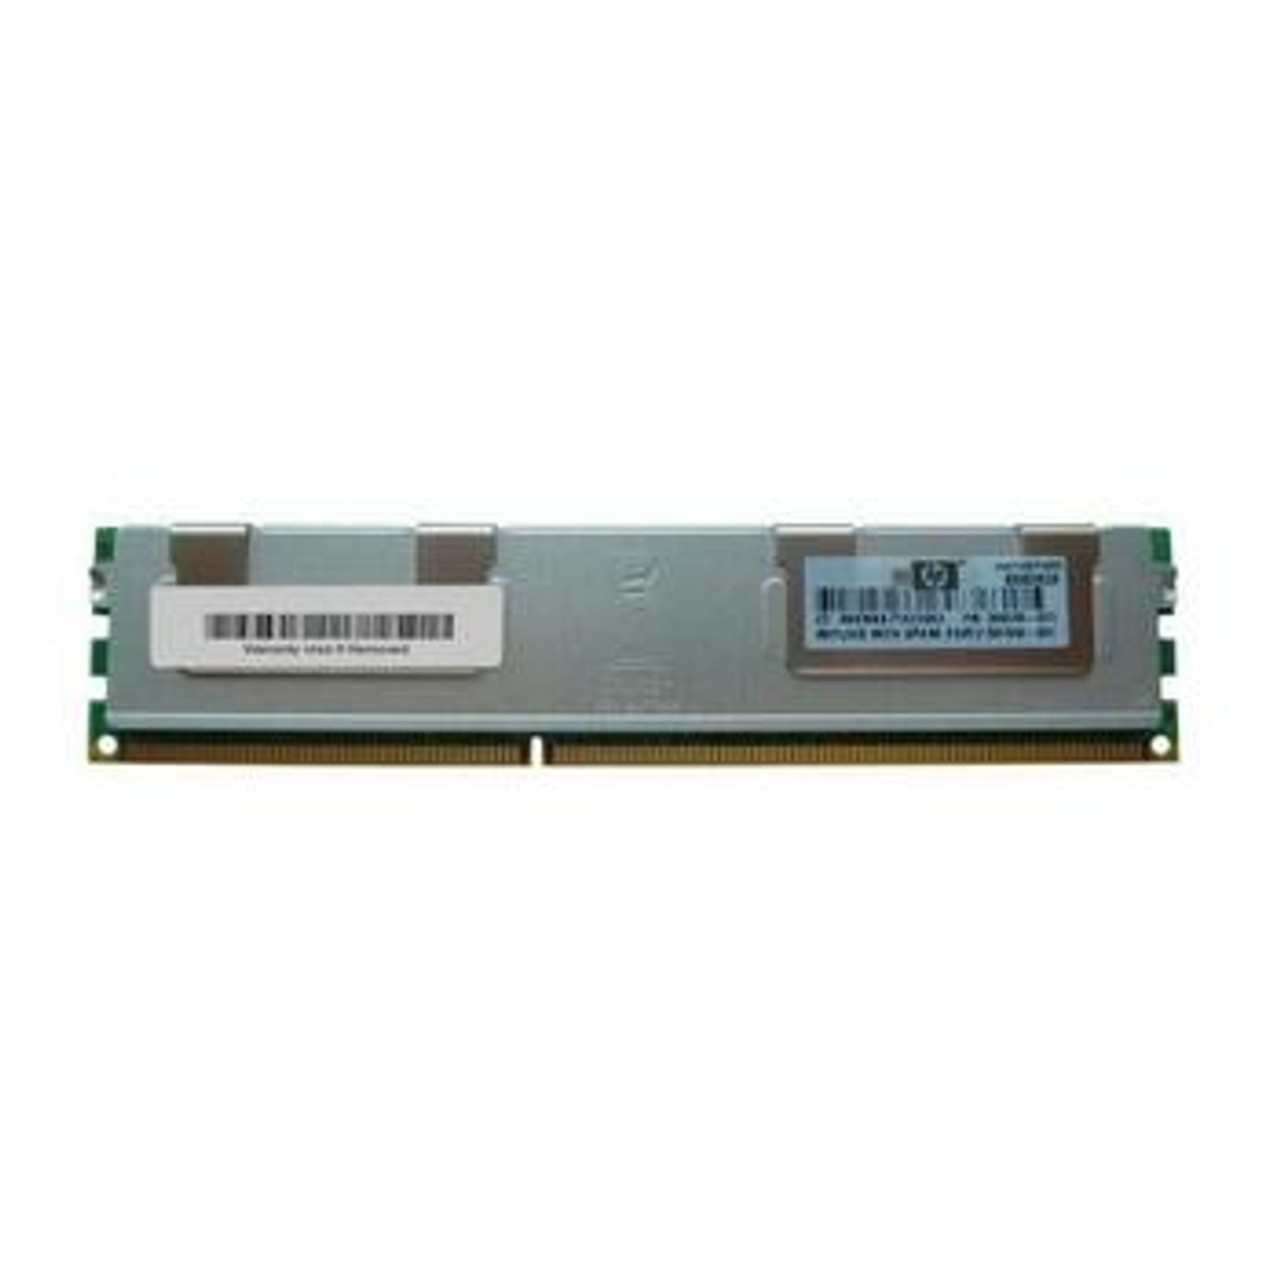 501536-001 HP 8GB DDR3 Registered ECC PC3-10600 1333Mhz 2Rx4 Memory